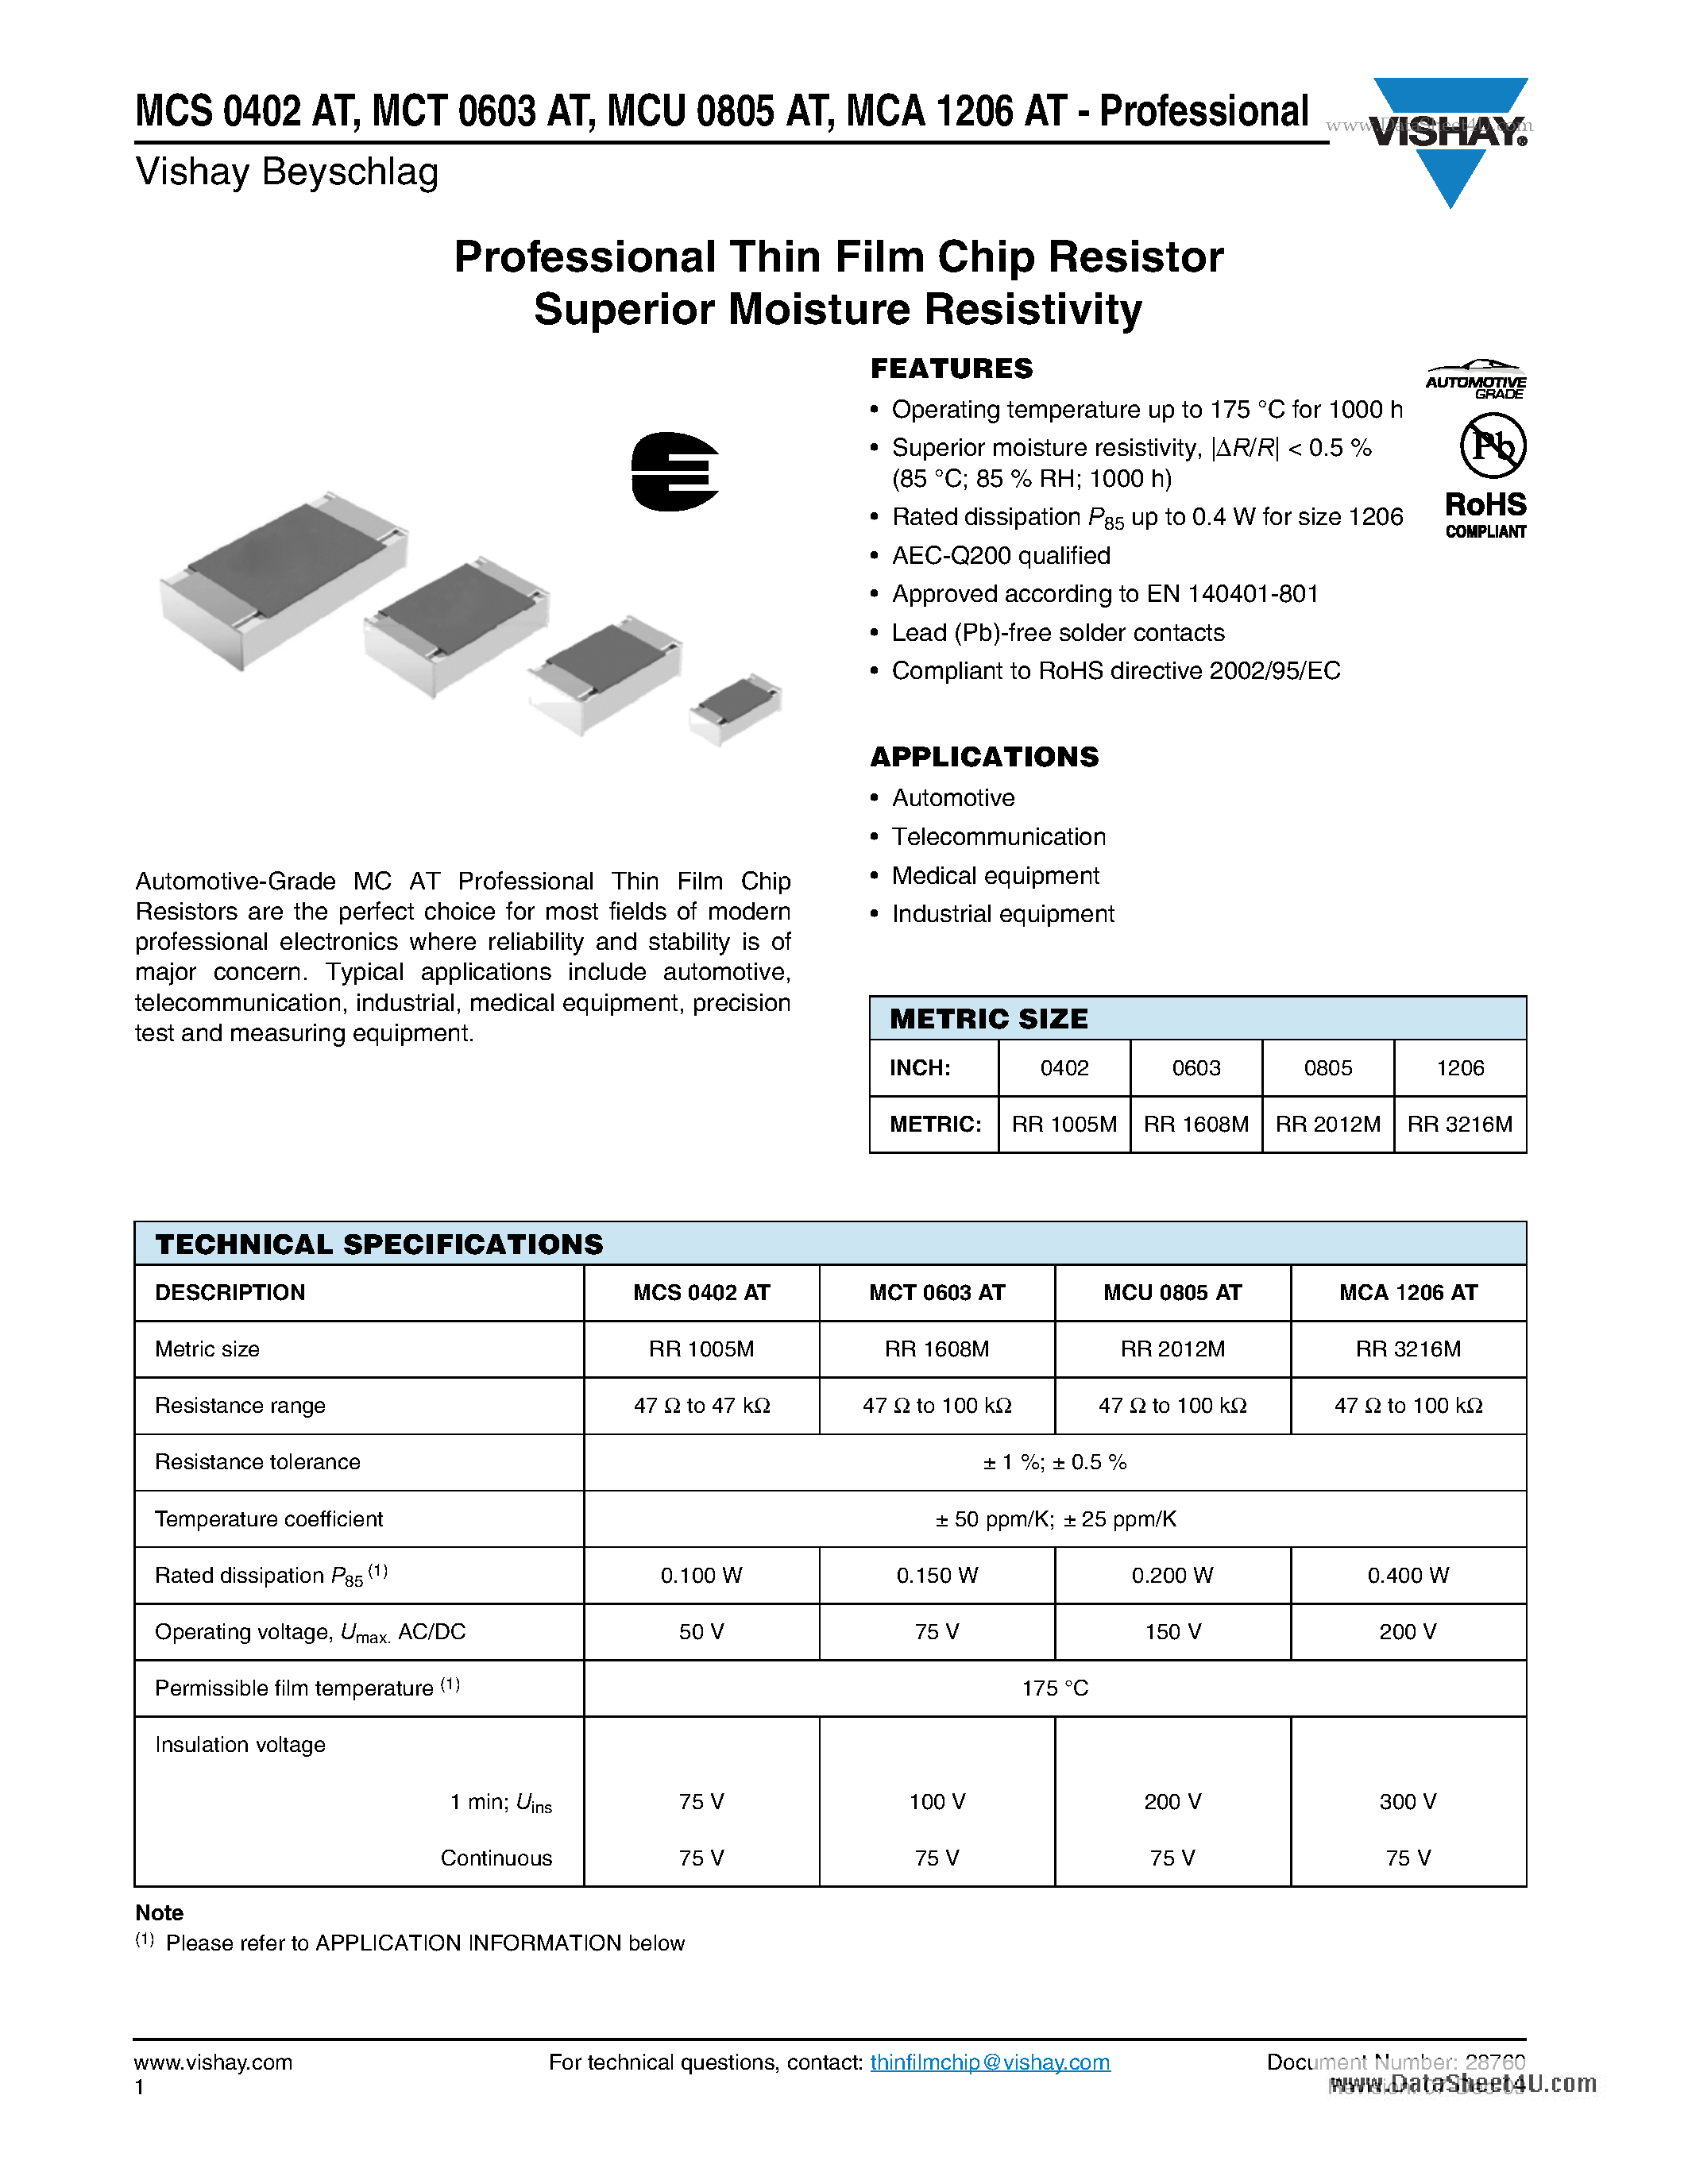 Datasheet MCT0603AT - Professional Thin Film Chip Resistor Superior Moisture Resistivity page 1